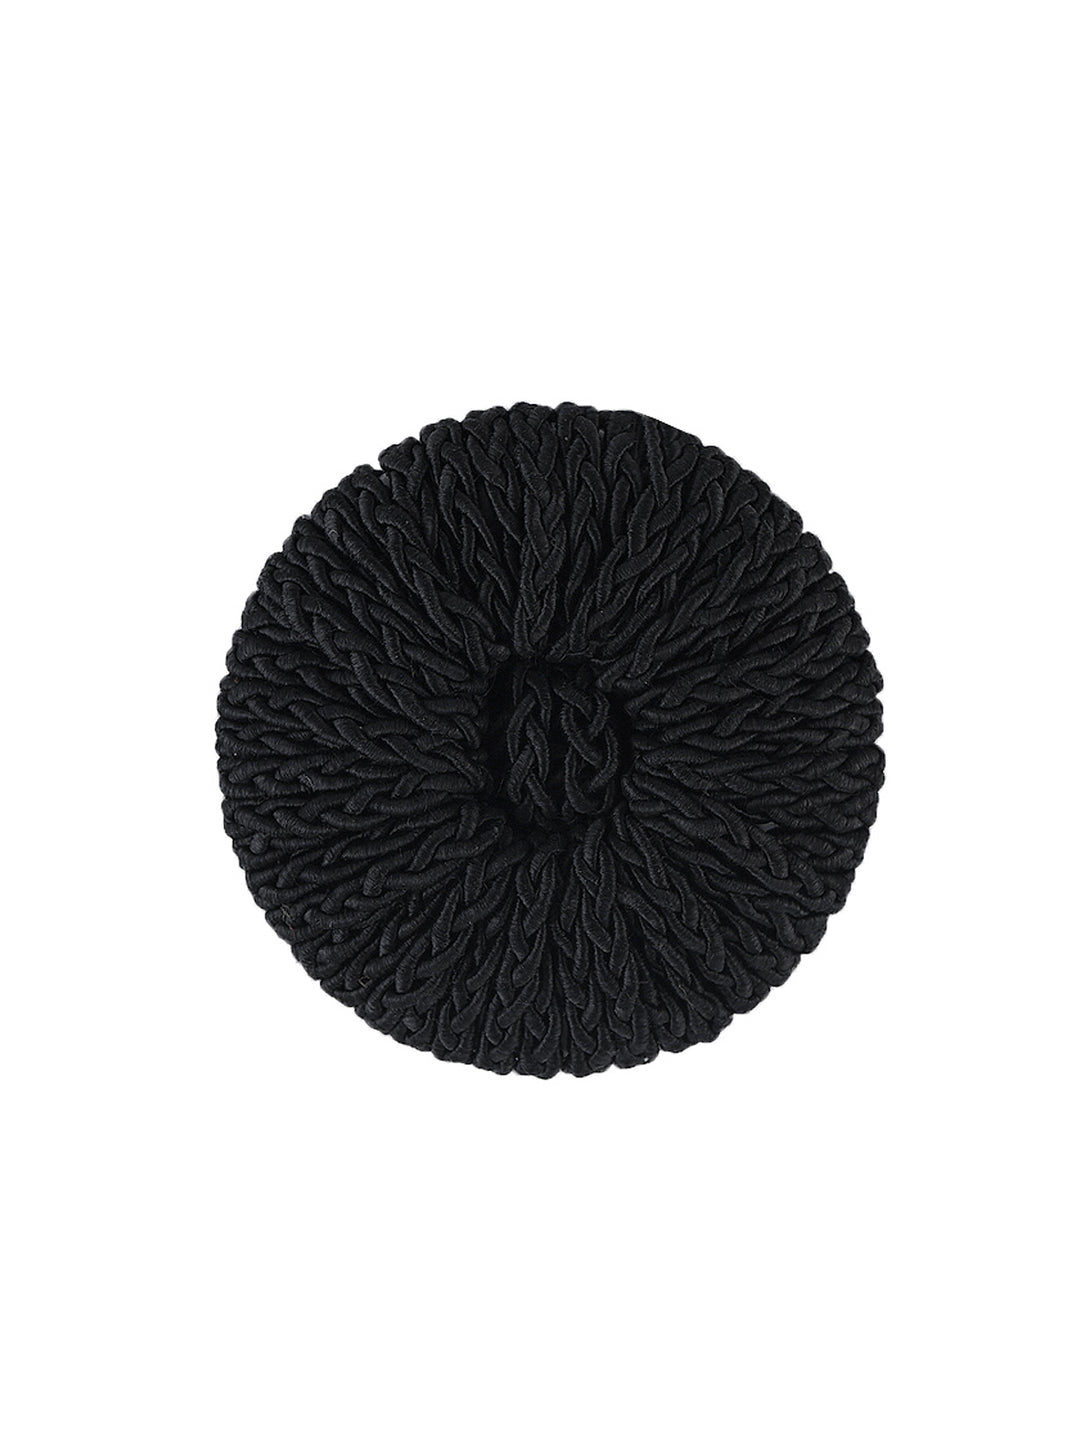 Handmade Black Fancy Braided Cord Button